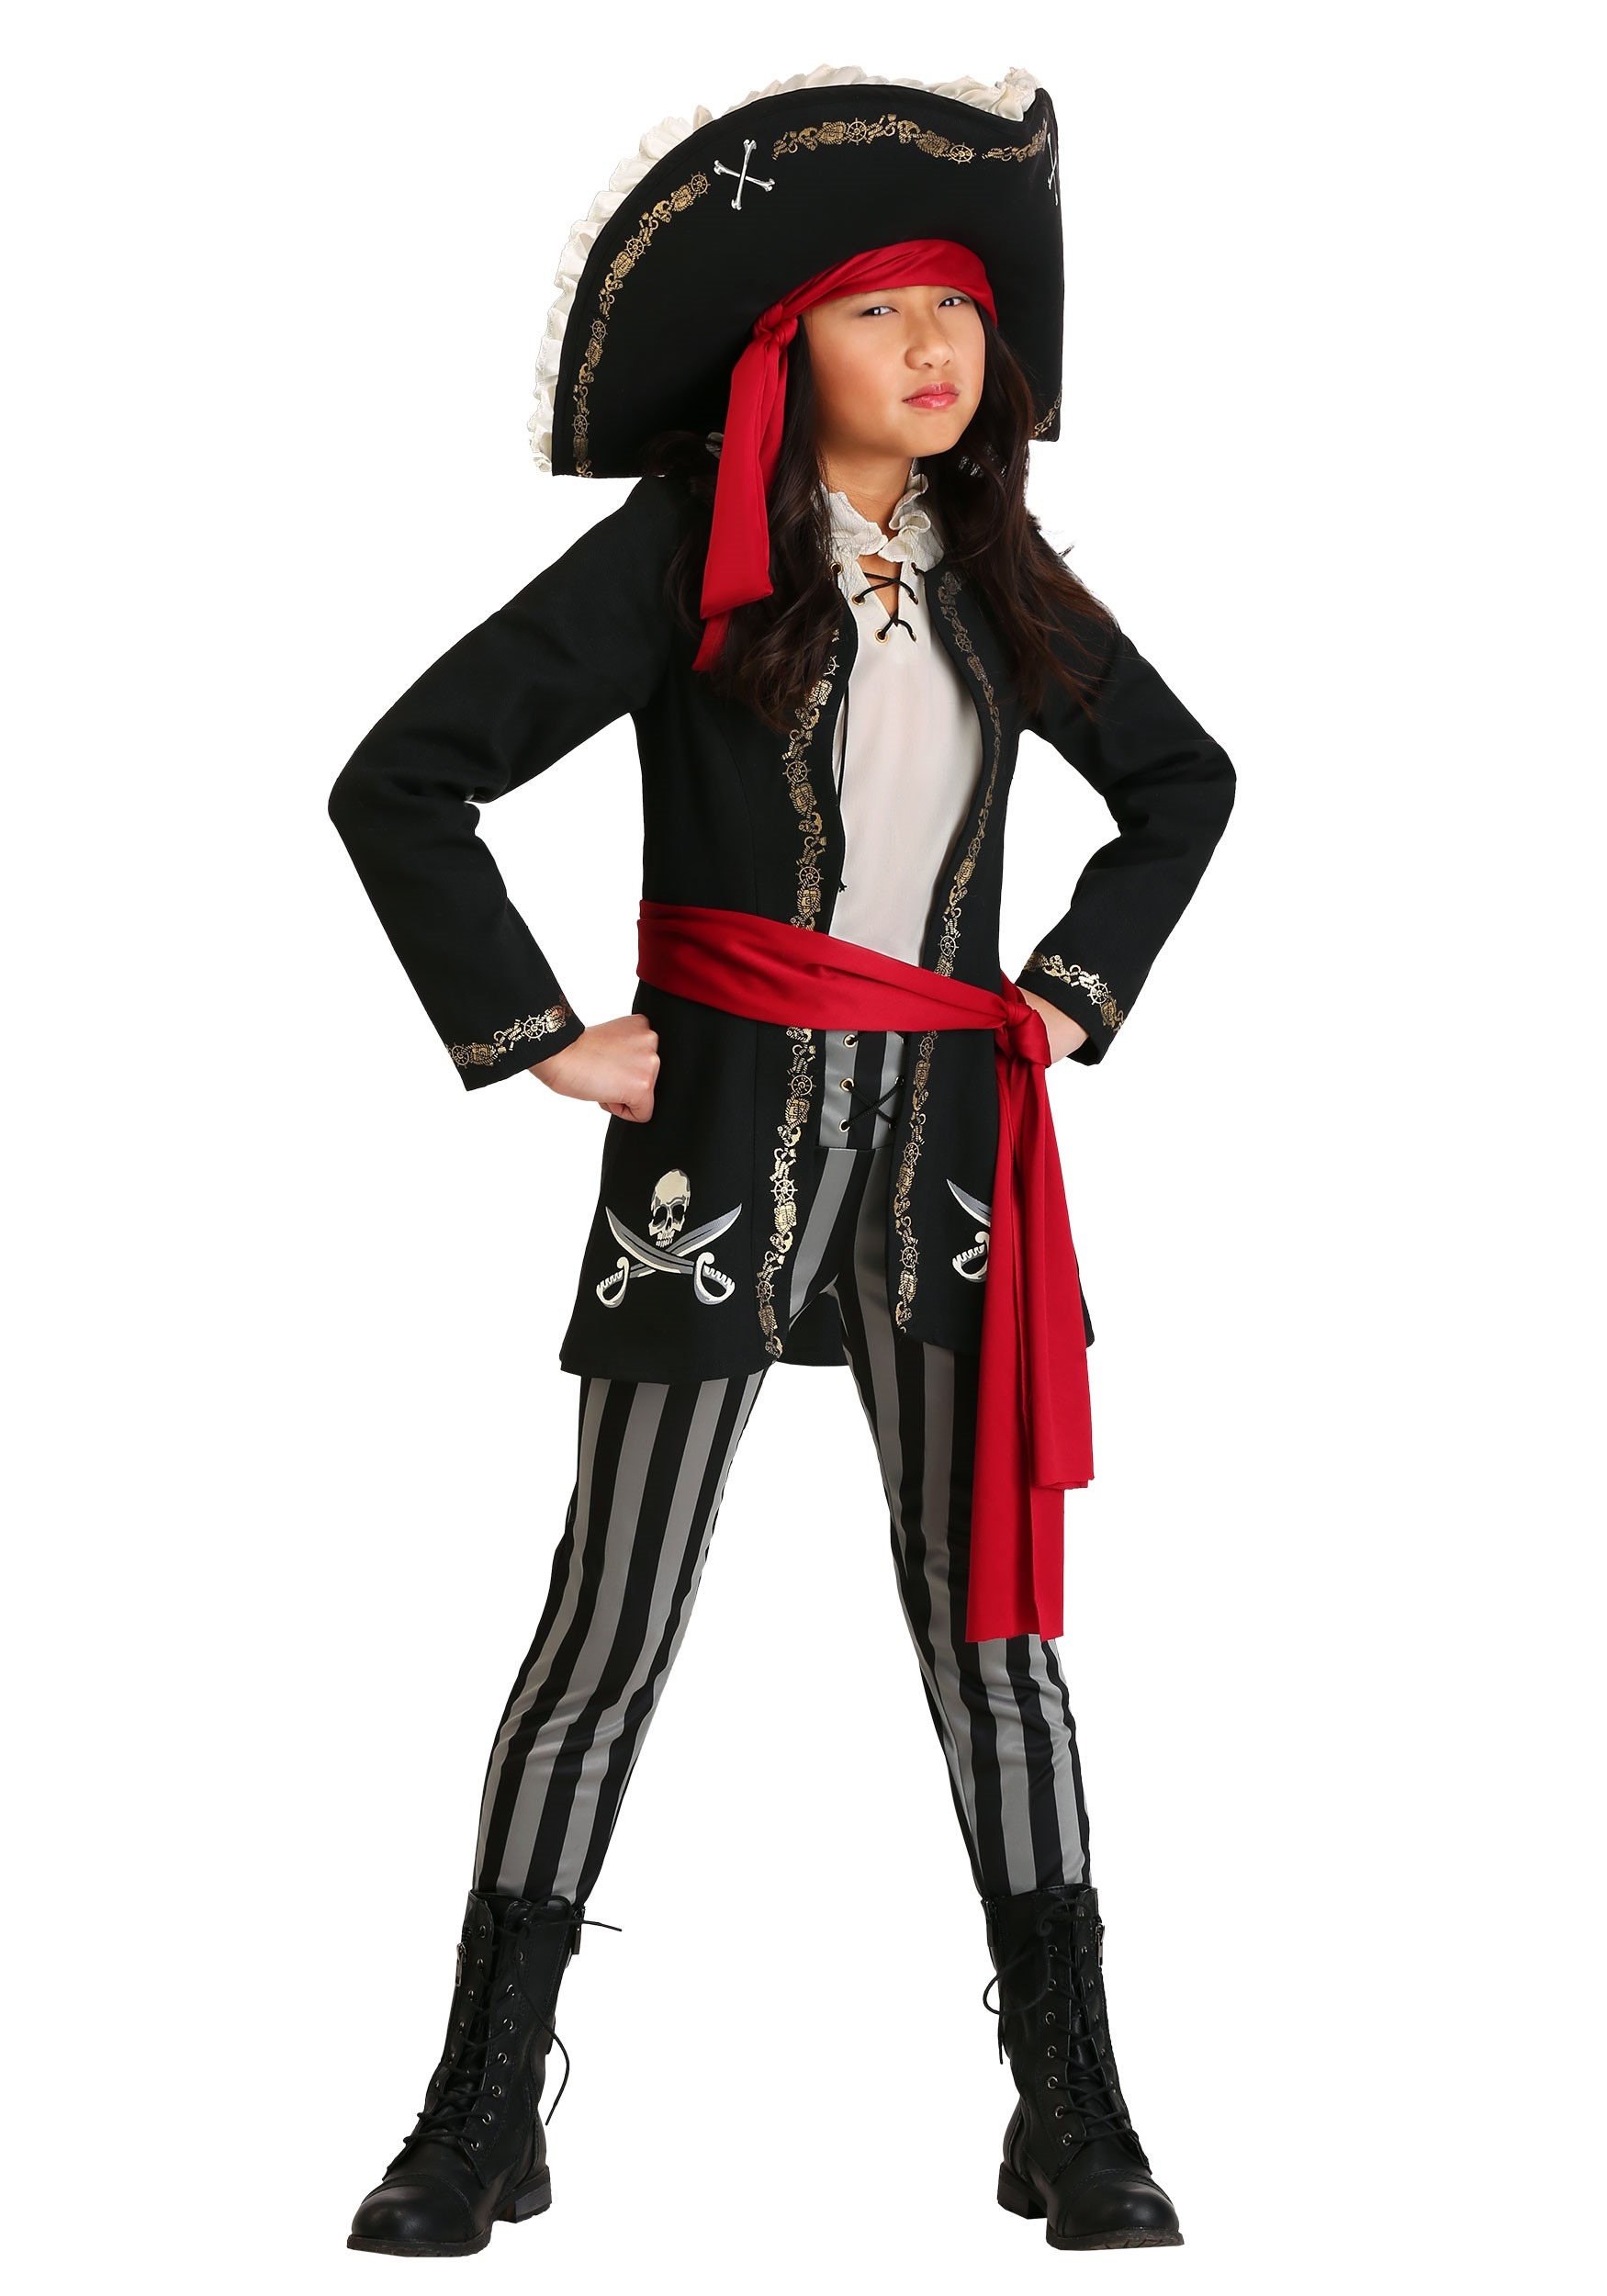 Photos - Fancy Dress FUN Costumes Girls Queen Gold Pirate Costume Black/Red FUN0719CH